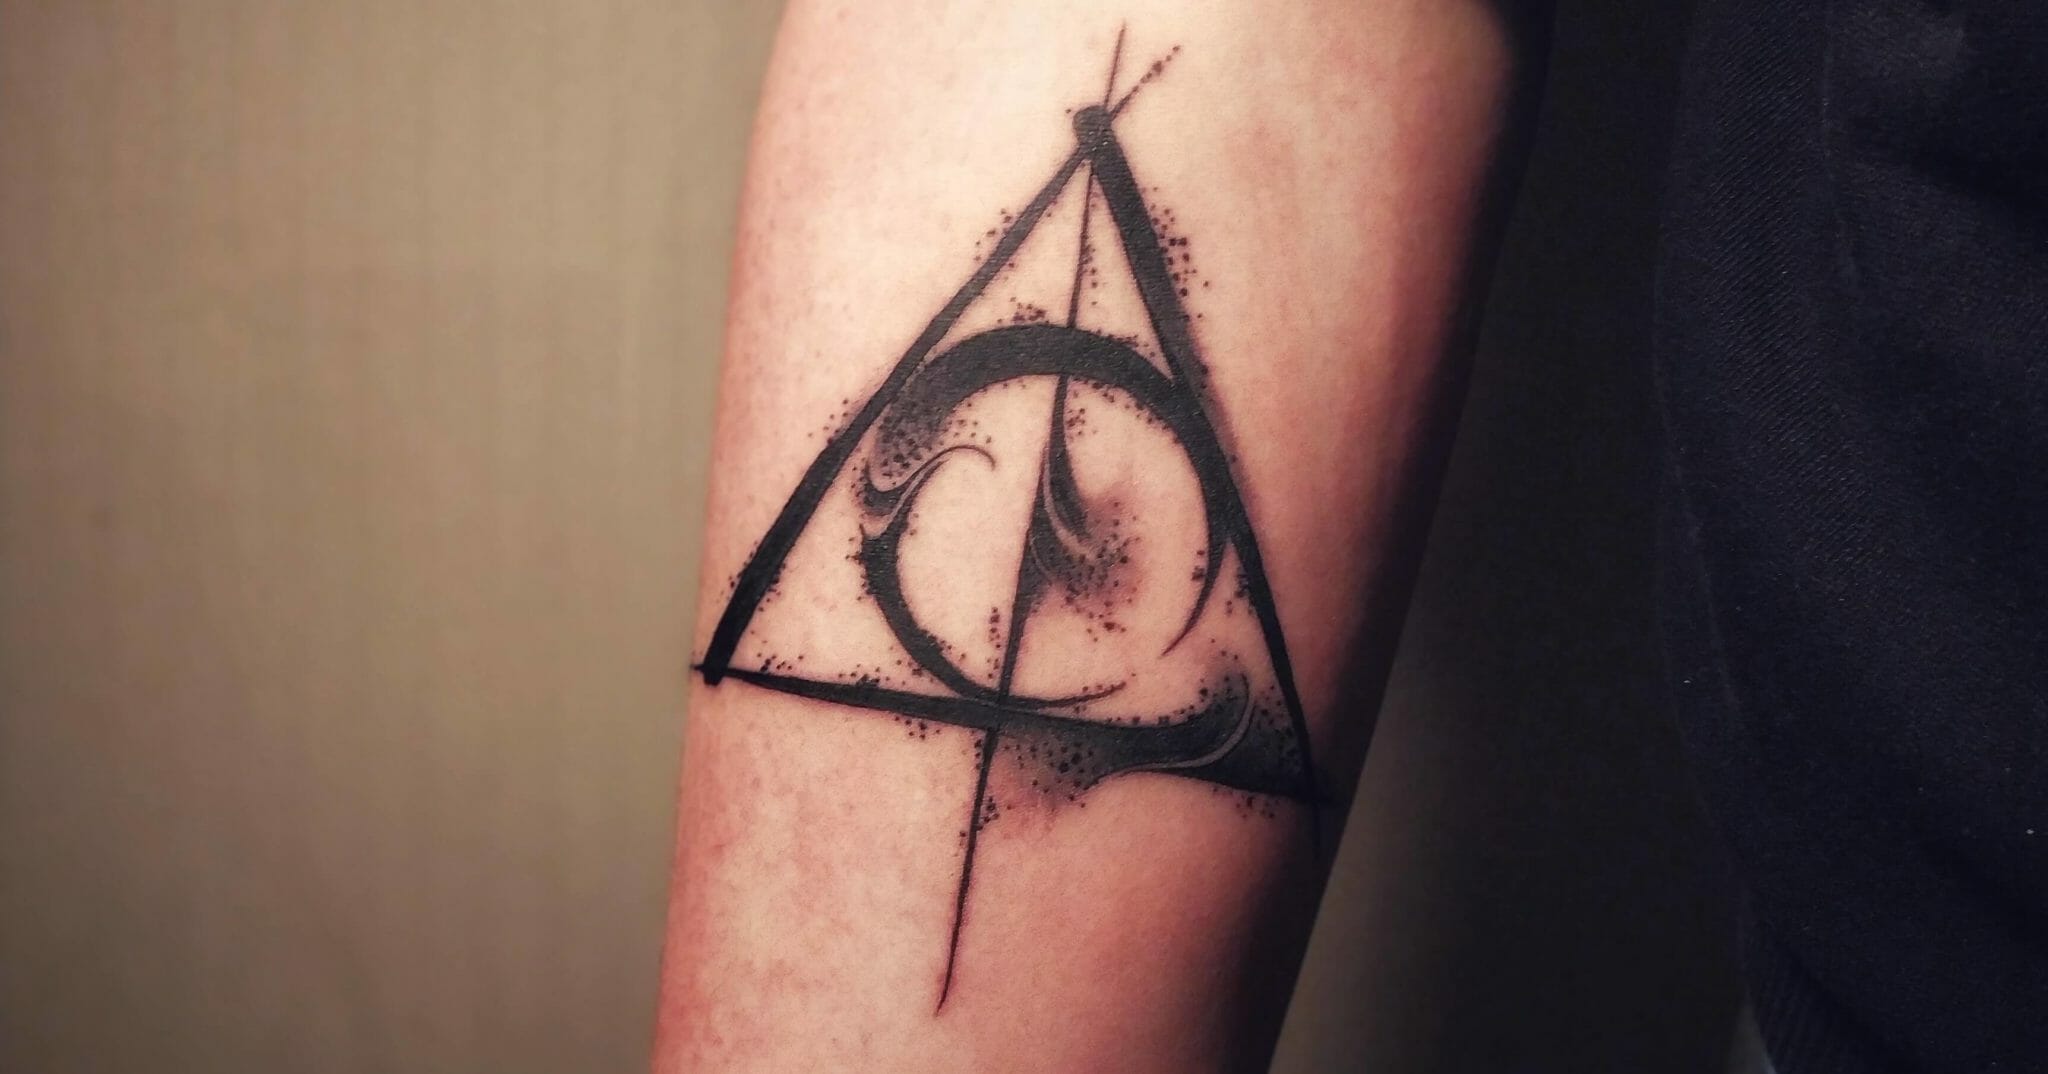 1. "Deathly Hallows symbol tattoo" - wide 1